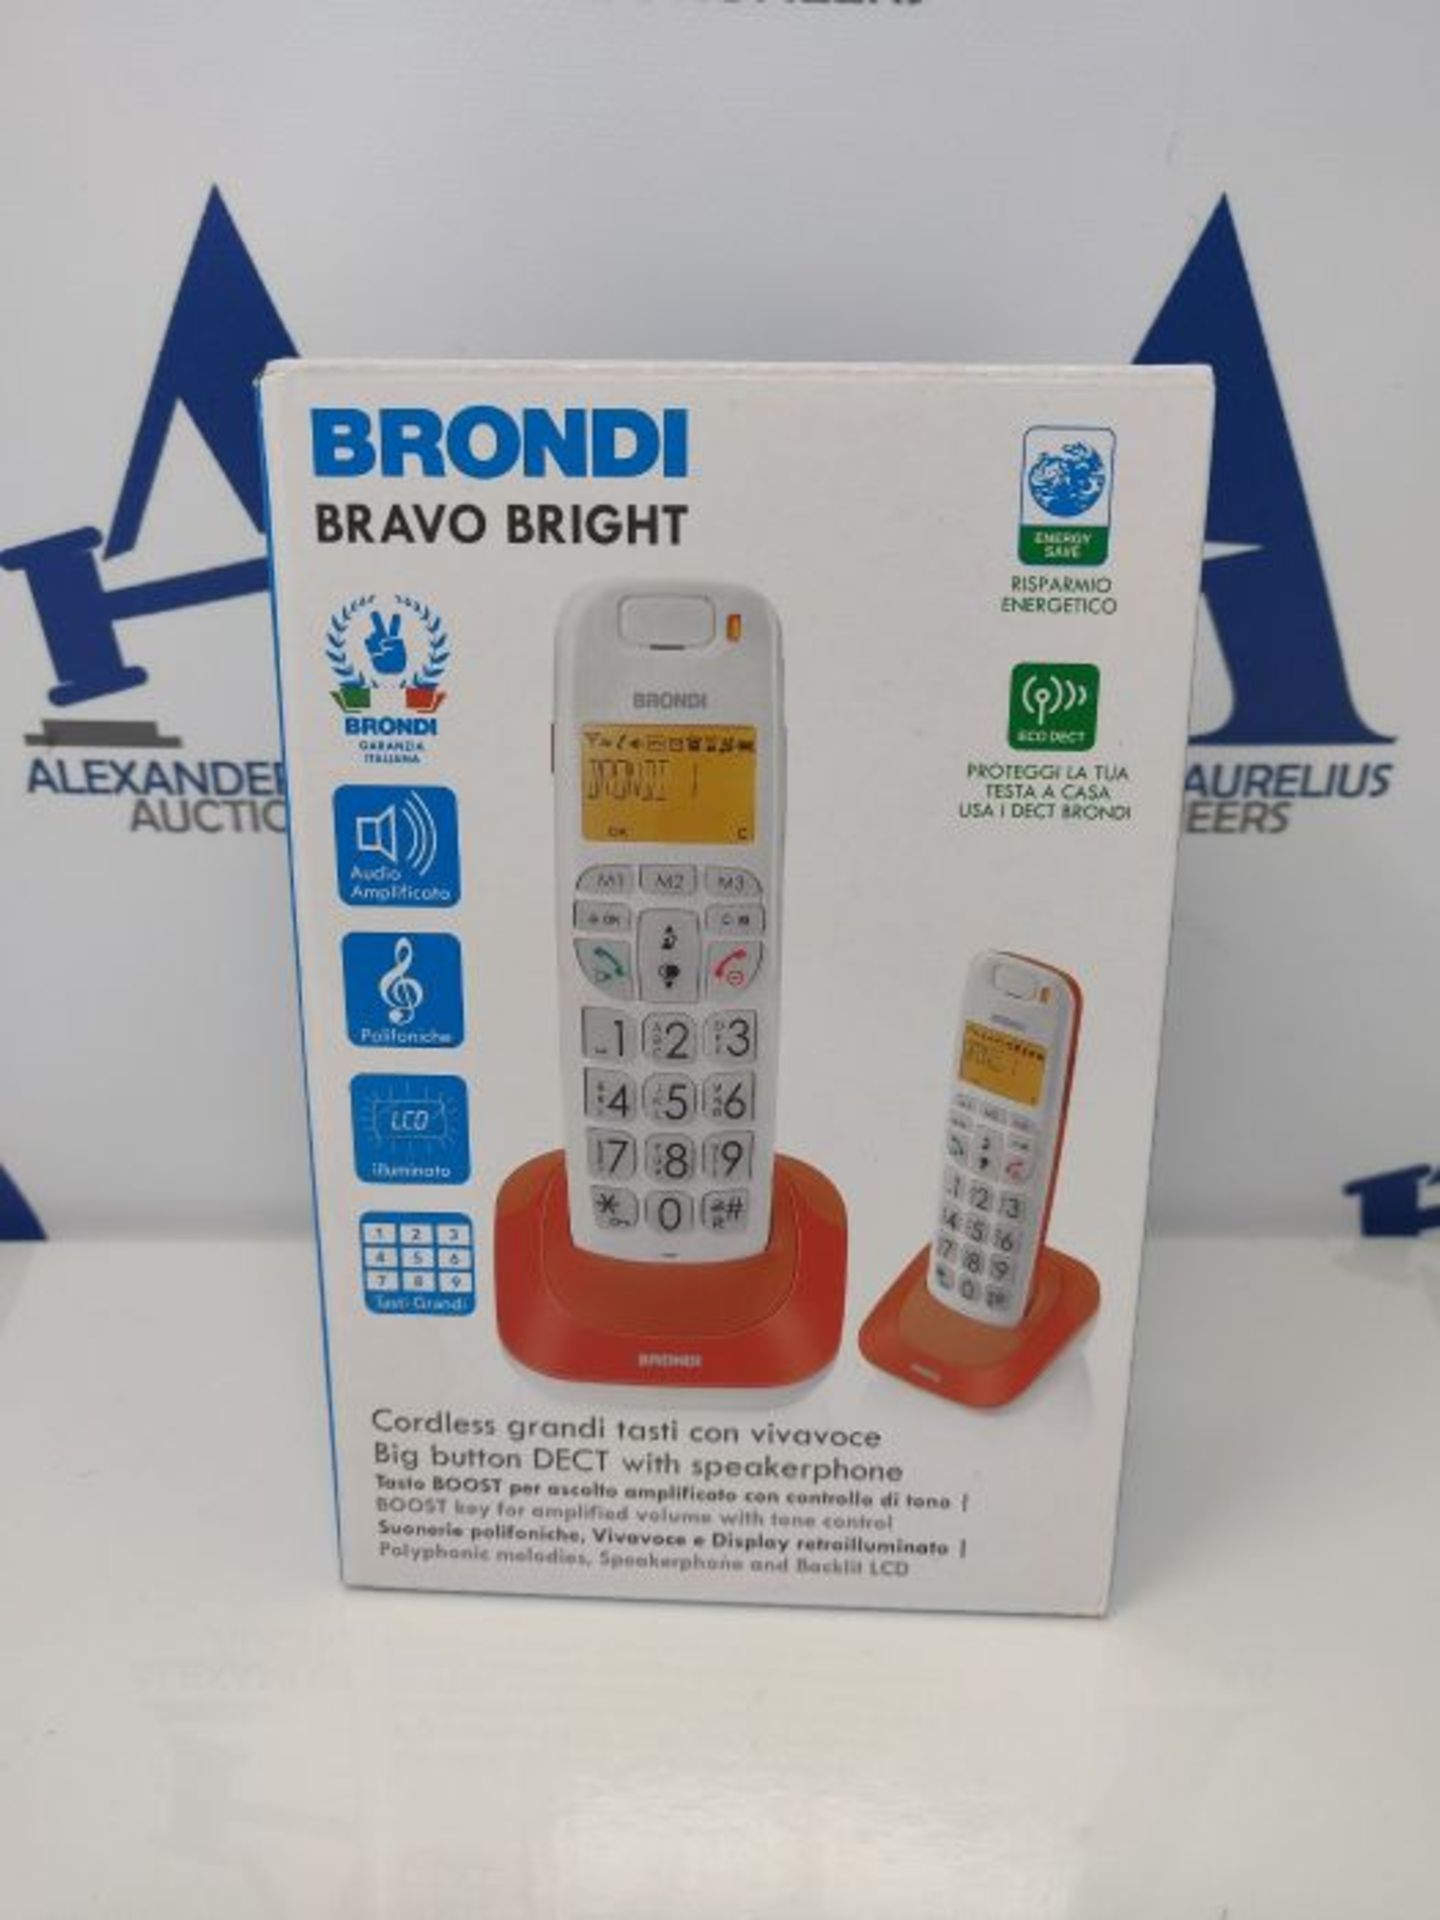 BRONDI Bravo Bright Telefono Cordless, Rosso - Image 2 of 3